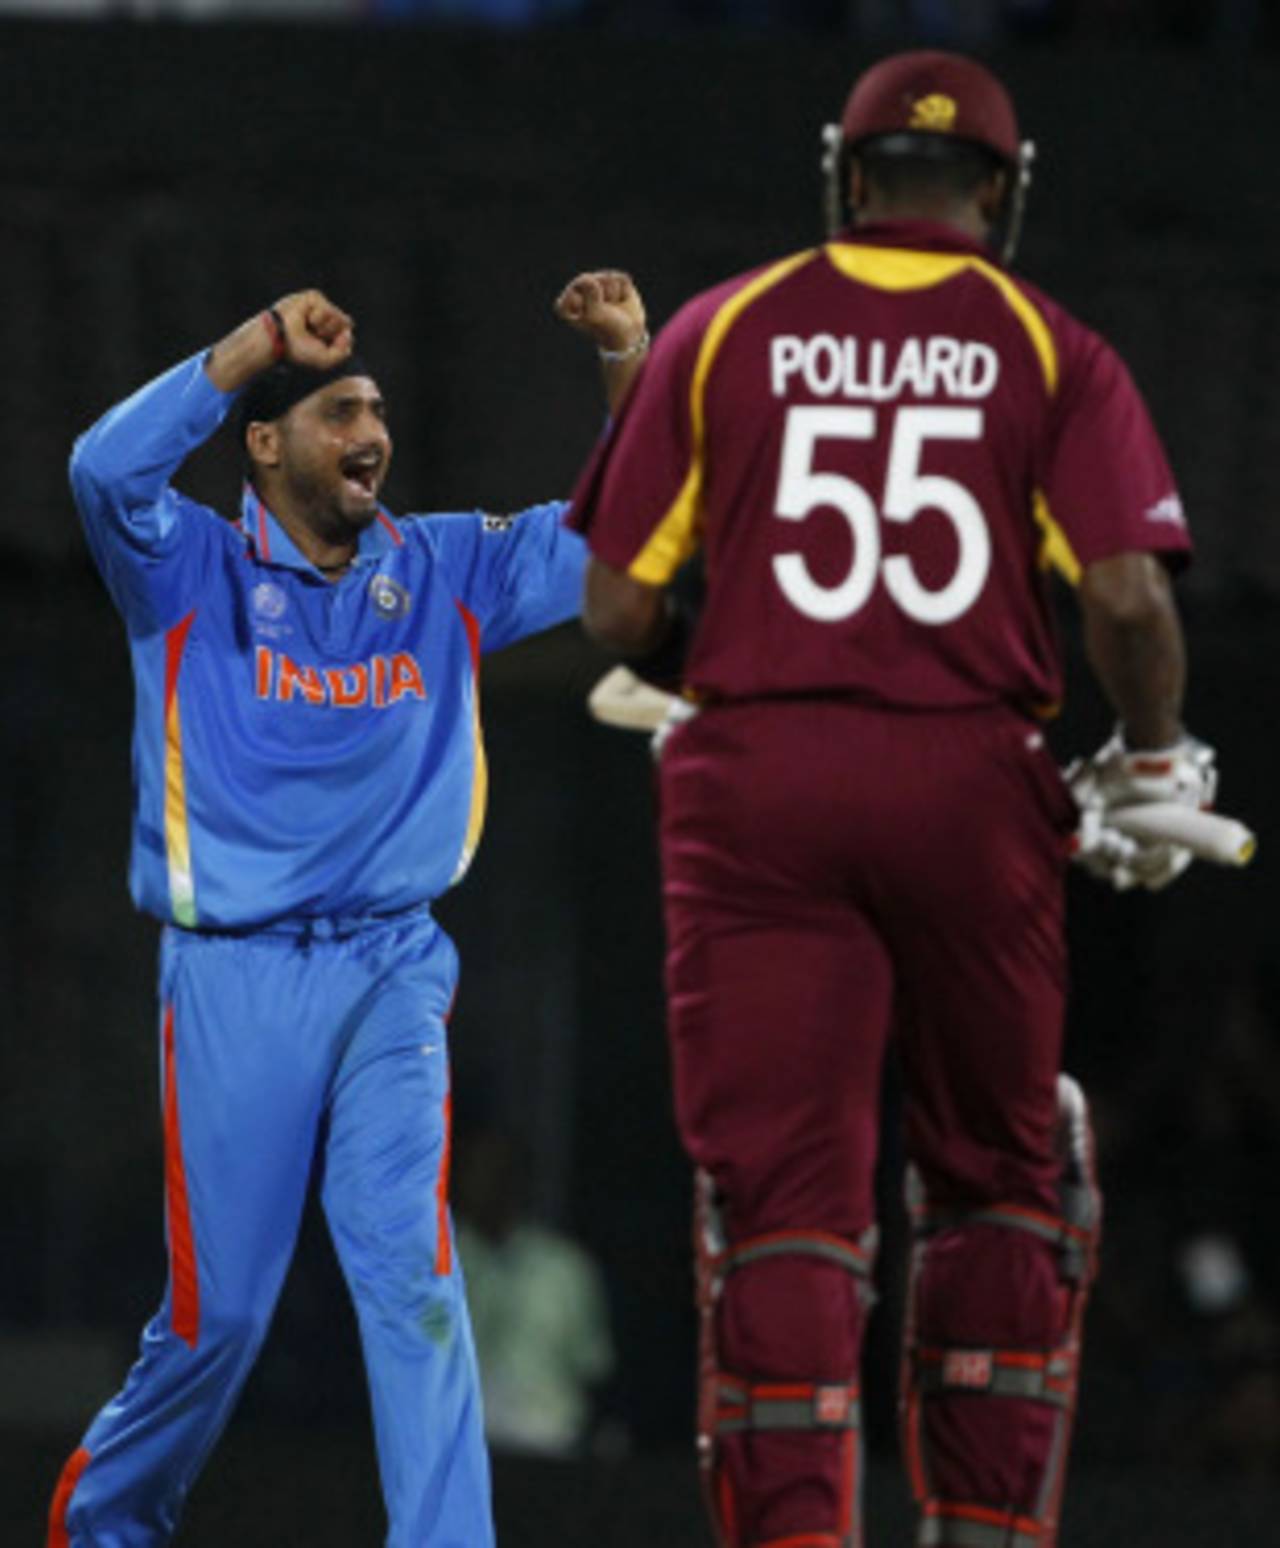 Harbhajan Singh celebrates after getting rid of Kieron Pollard, India v West Indies, Group B, World Cup 2011, March 20, 2011